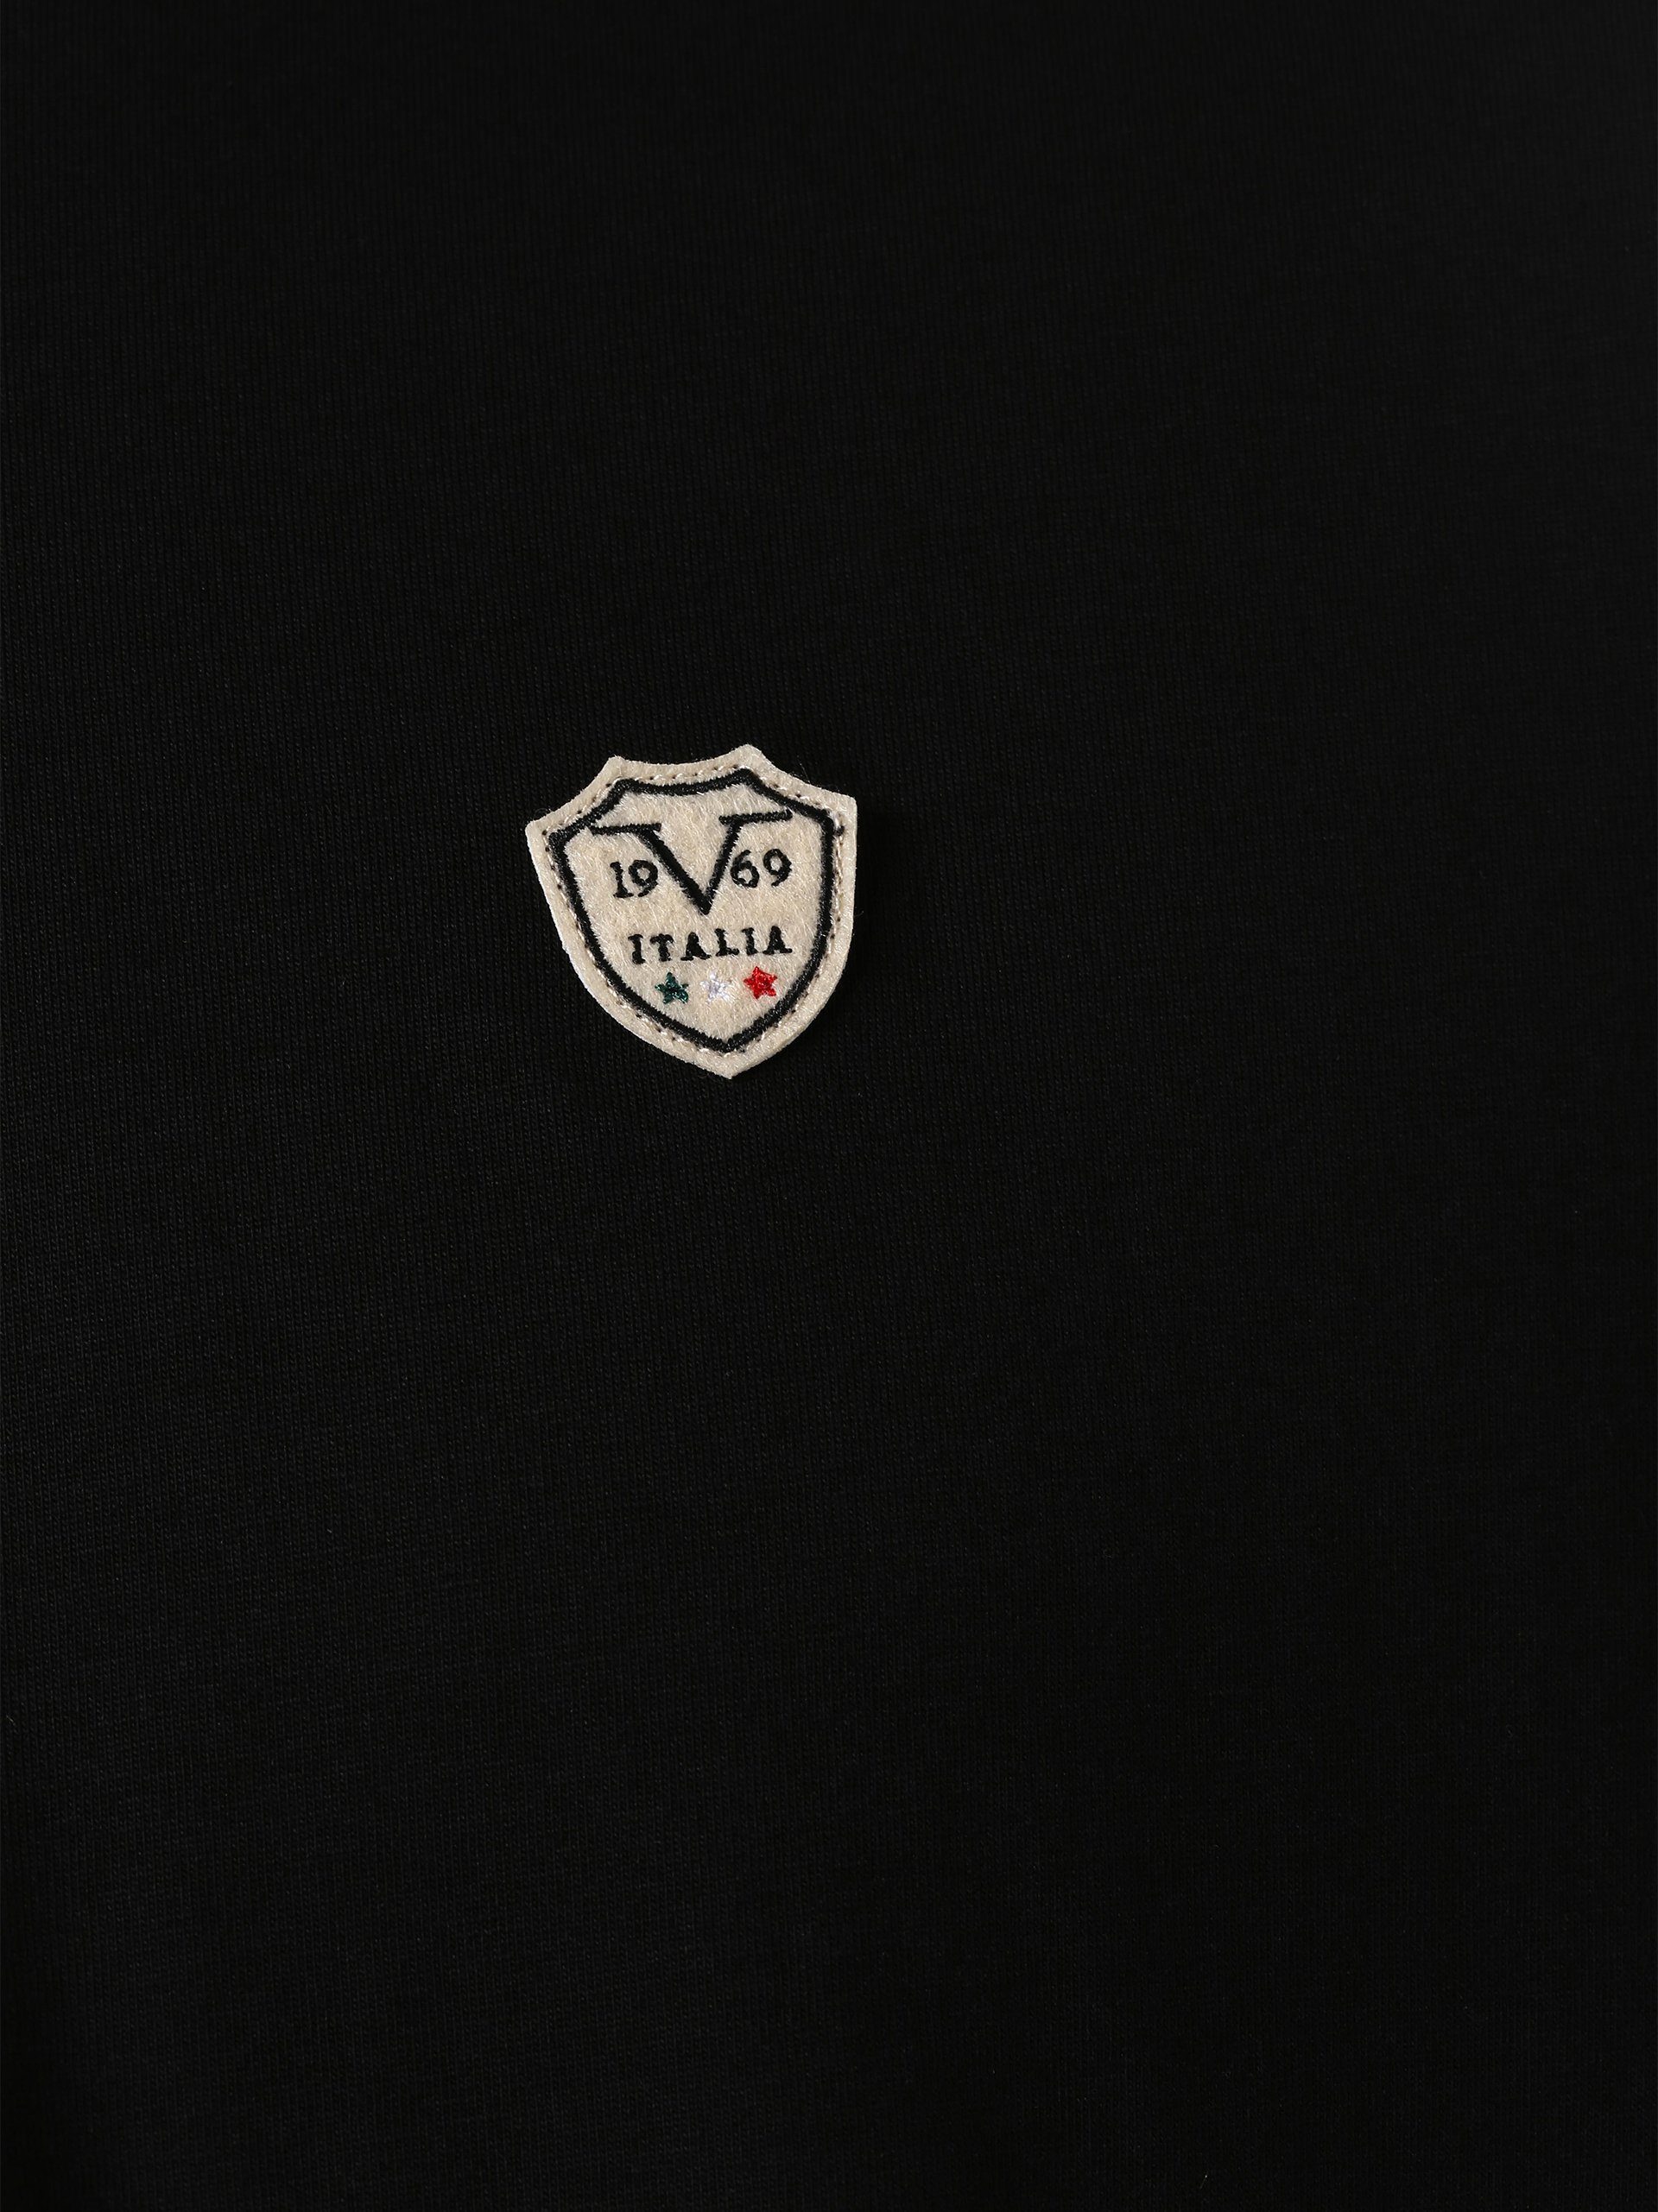 Toni 19V69 by 19V69 Italia Italia Versace Poloshirt Schield